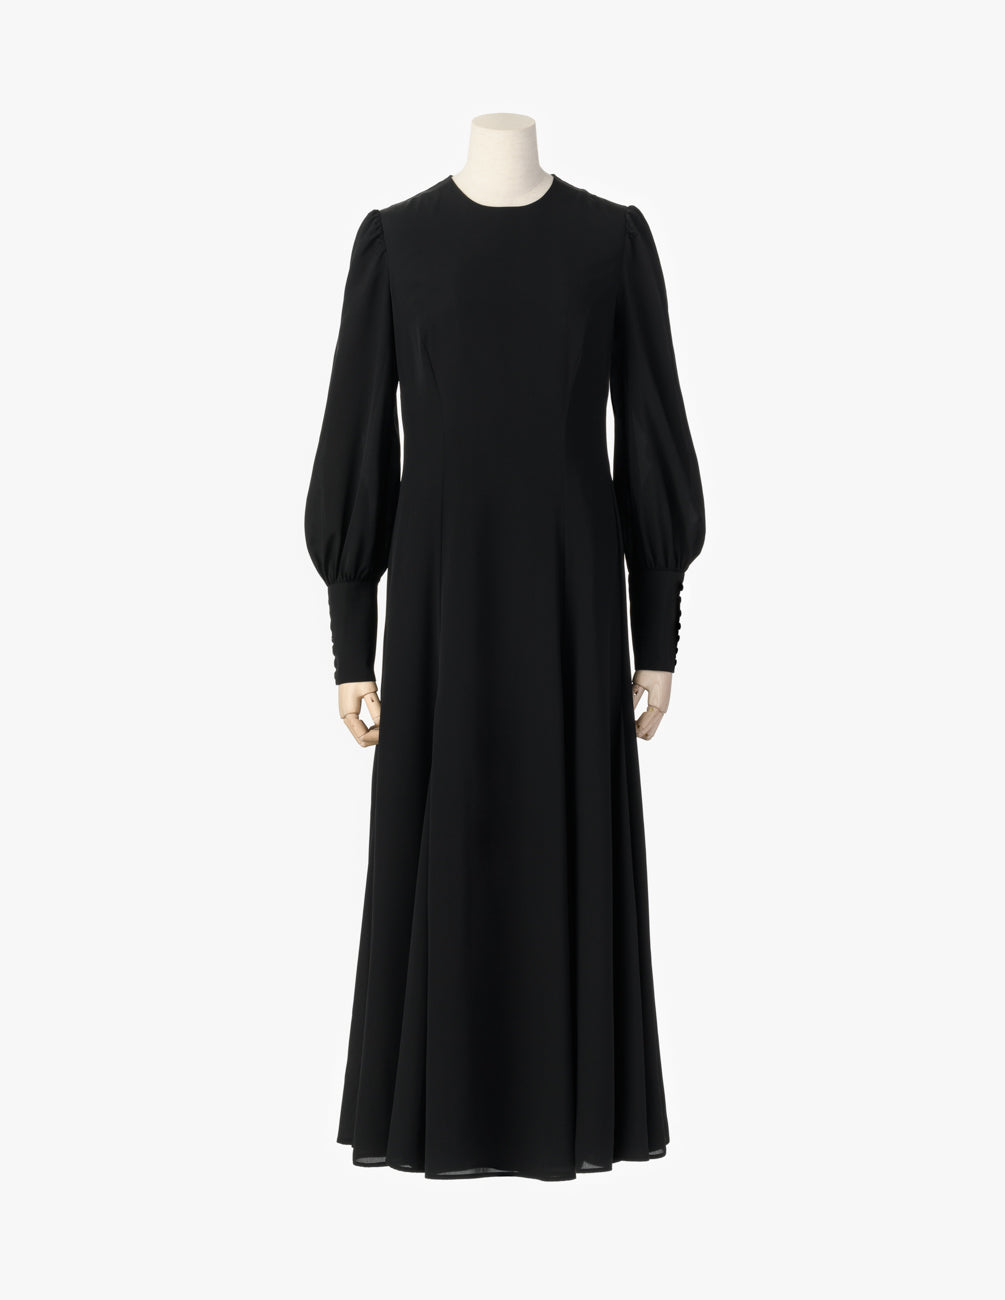 MARIHA(マリハ) セレナーデのドレス (長袖) Black シティードレス 